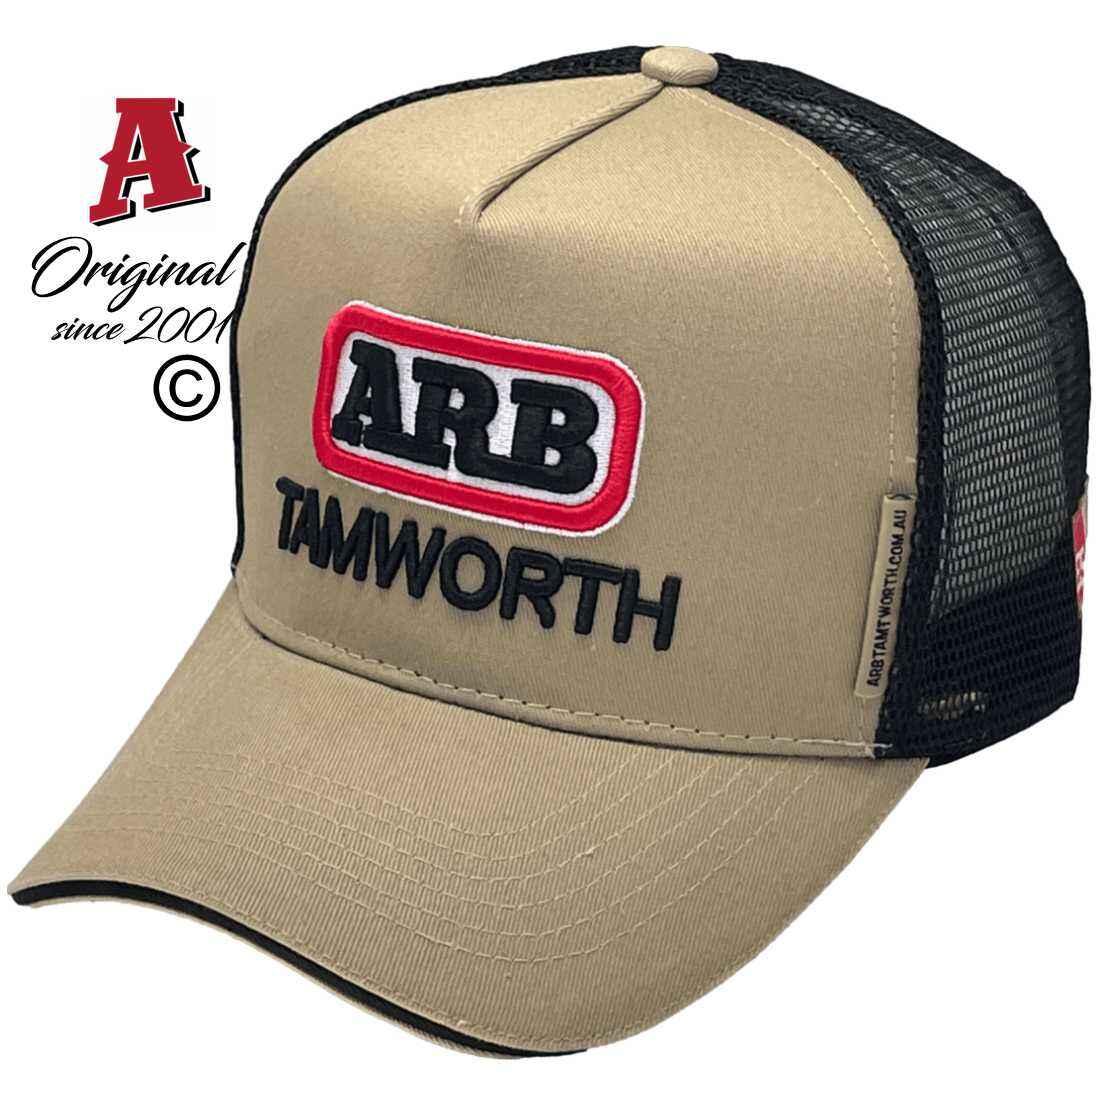 ARB Tamworth NSW Power Aussie Trucker Hats High Profile Australian HeadFit Crown Sandwich Brim Snapback Khaki Black